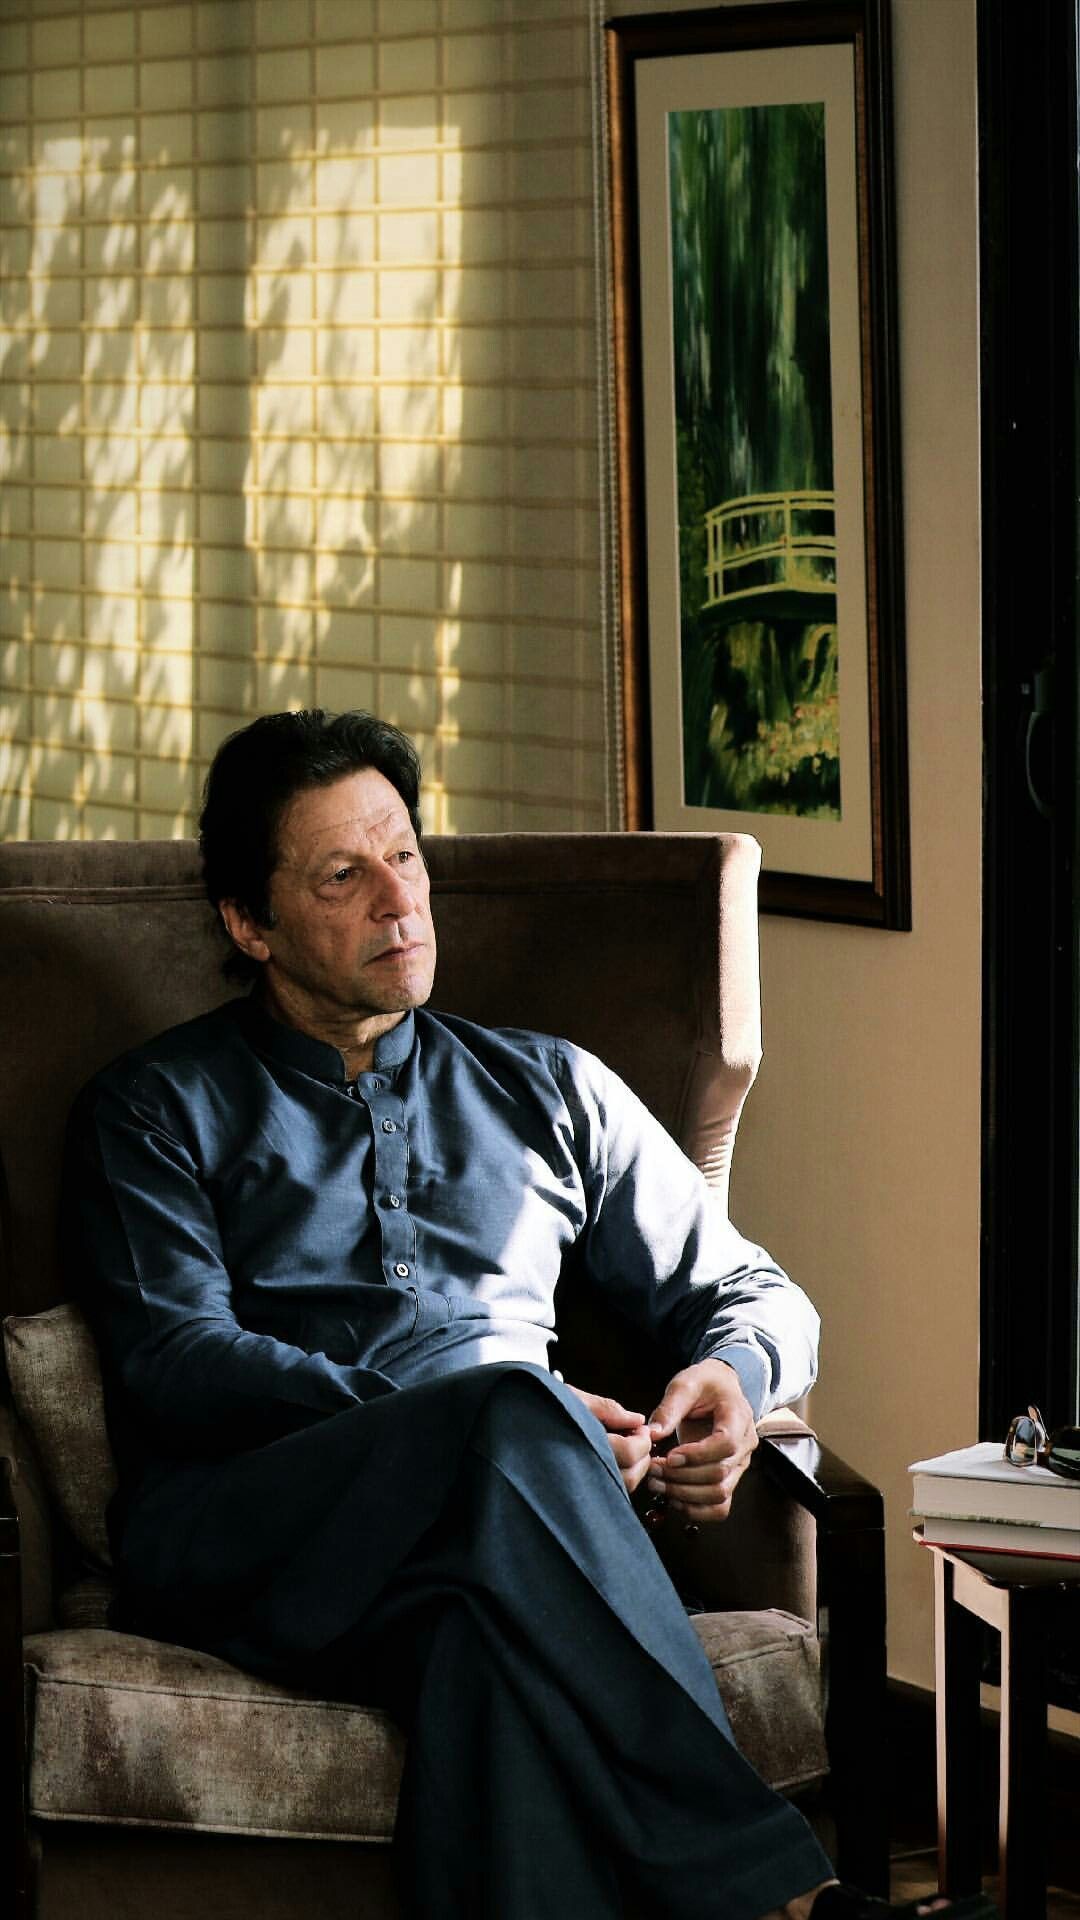 PM Imran Khan Wallpapers - Wallpaper Cave